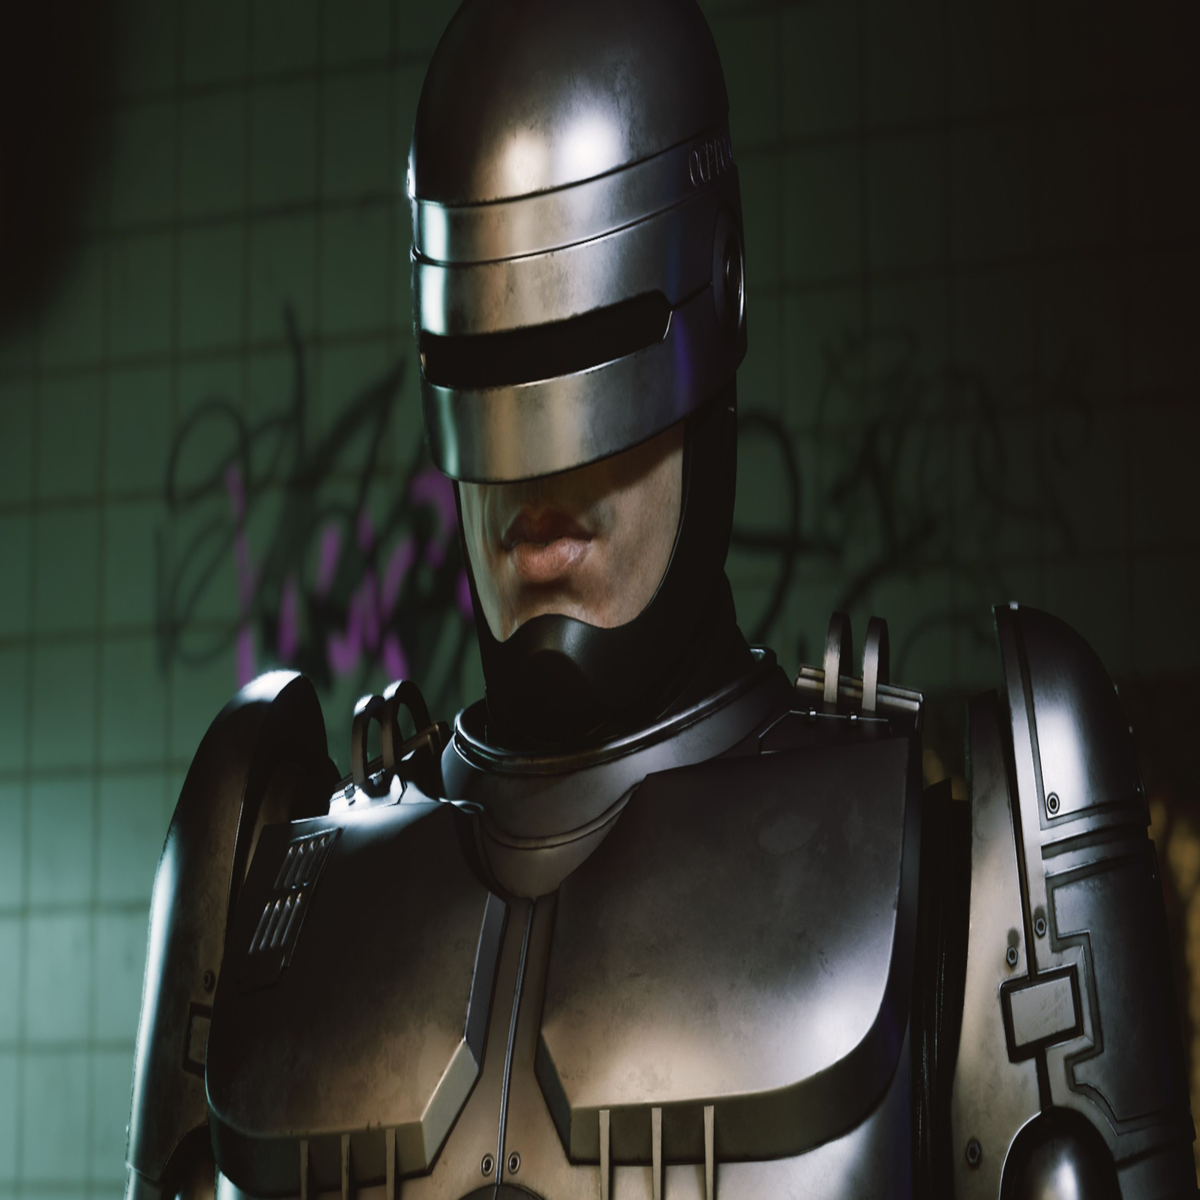 RoboCop: Rogue City Review (PS5) - I'd Buy That For A Dollar